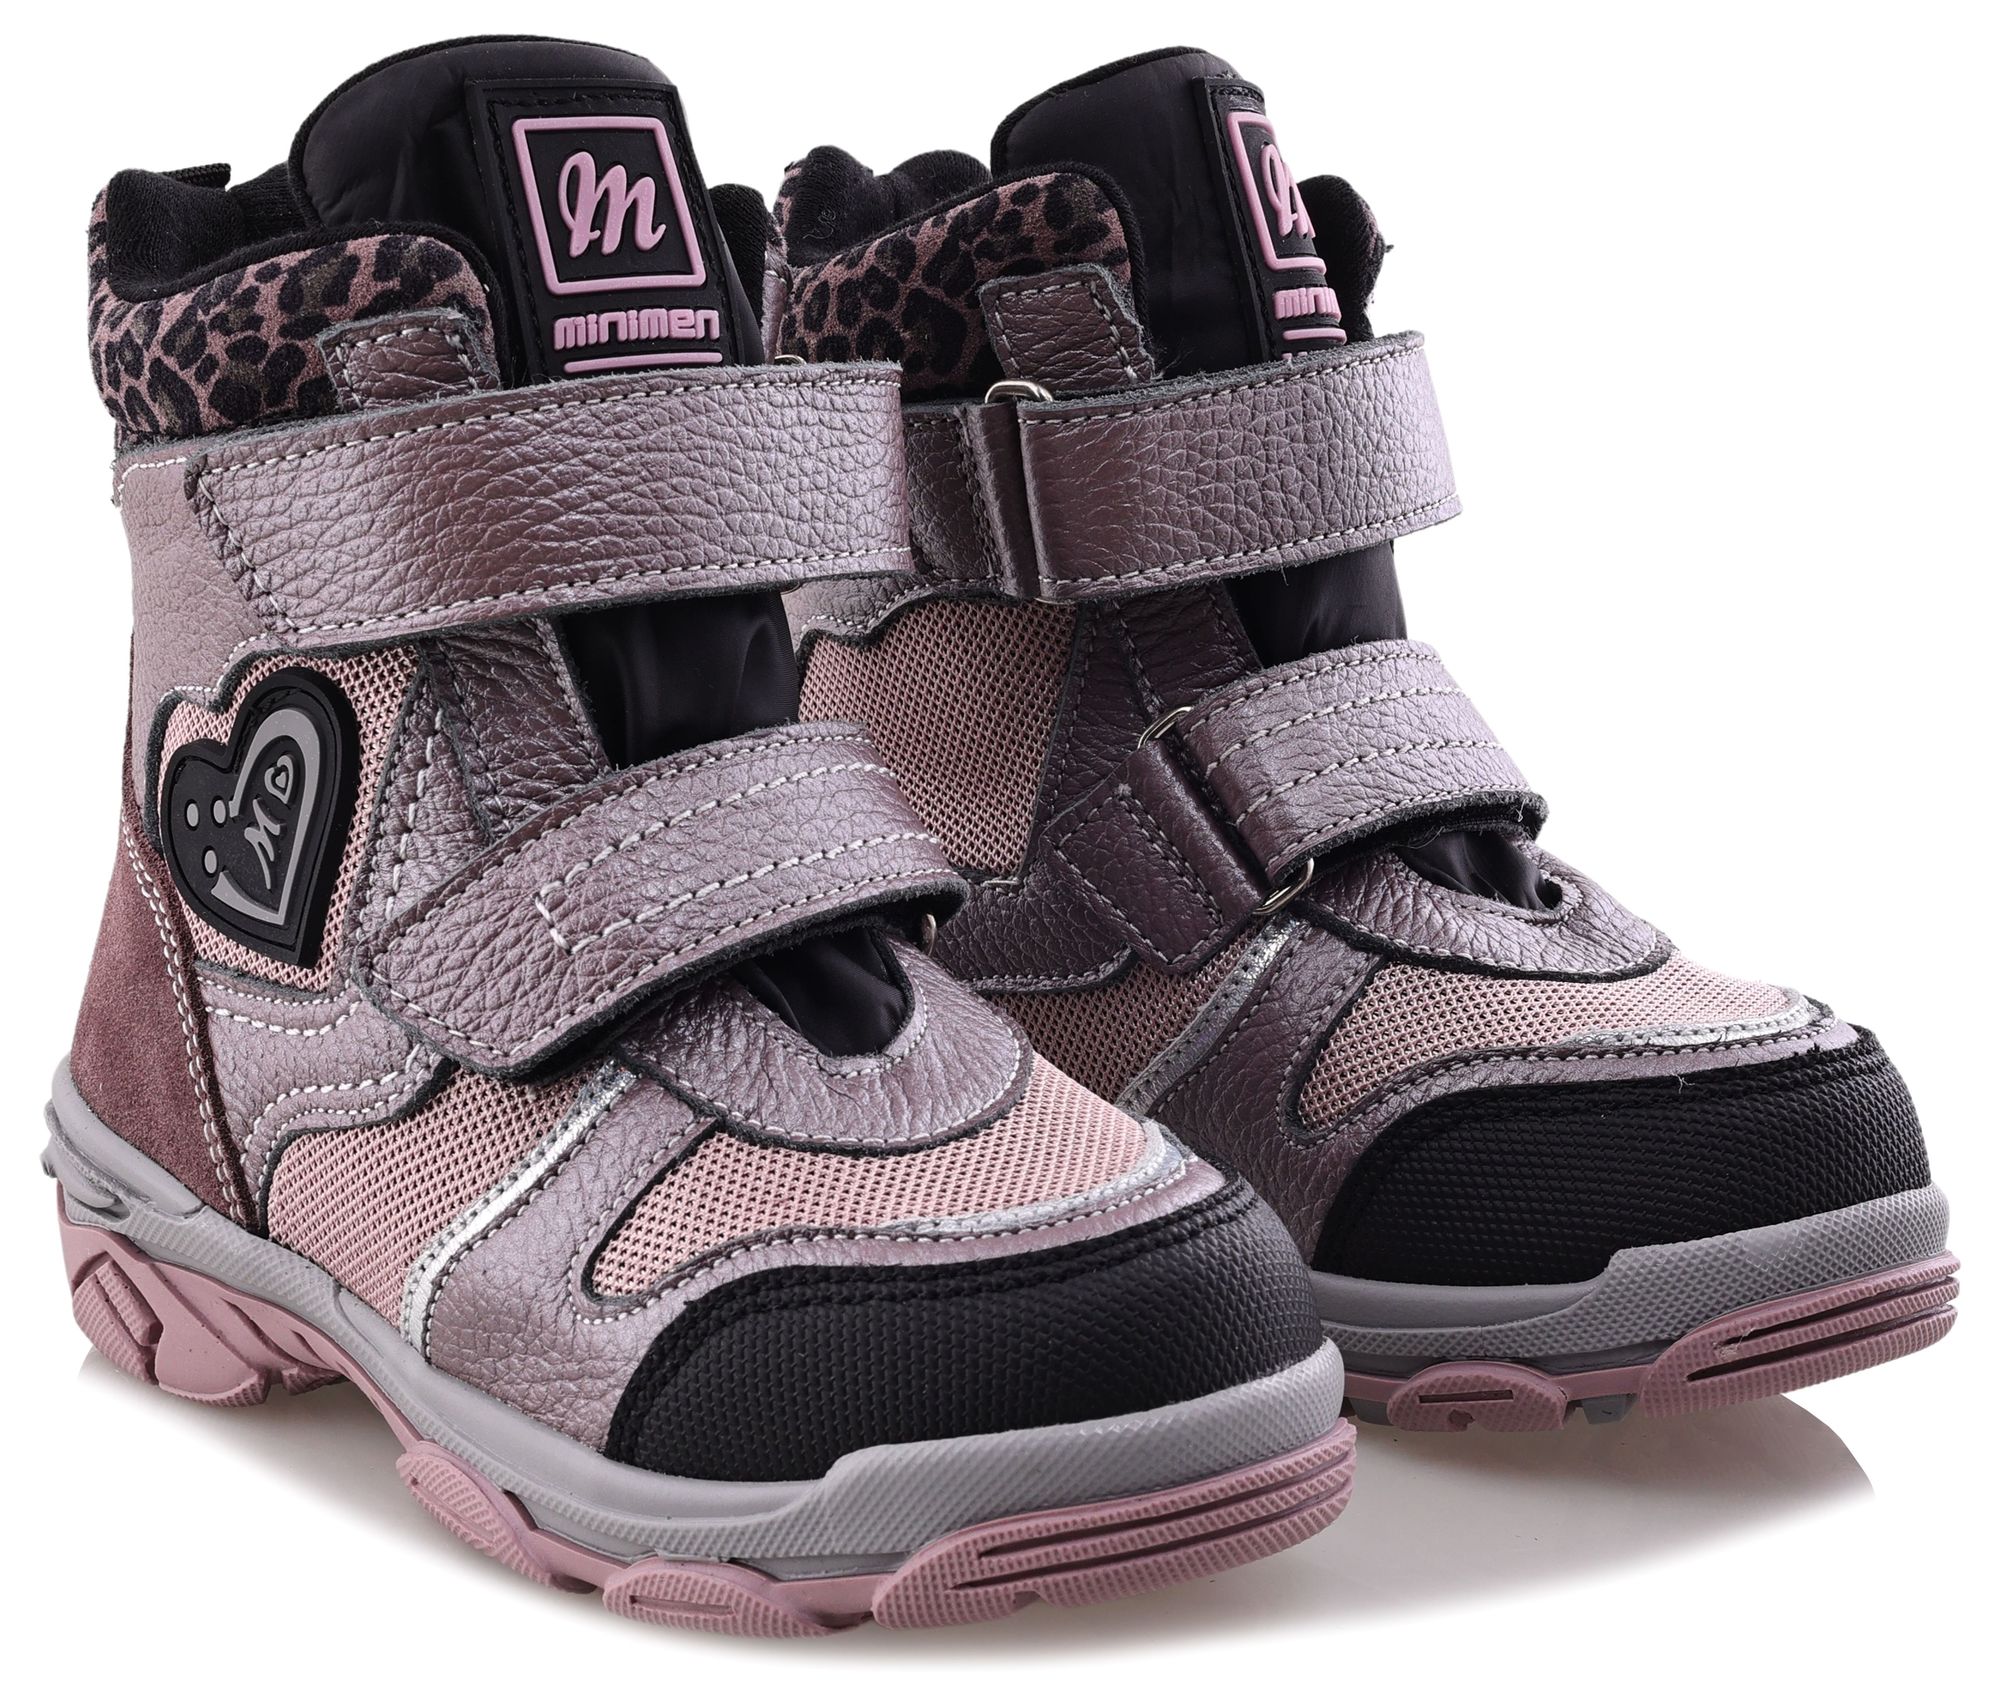 Ботинки Minimen для девочек, розовые, размер 29, 2656-53-23B-02 ботинки minimen для девочек розовые размер 30 2656 53 23b 02